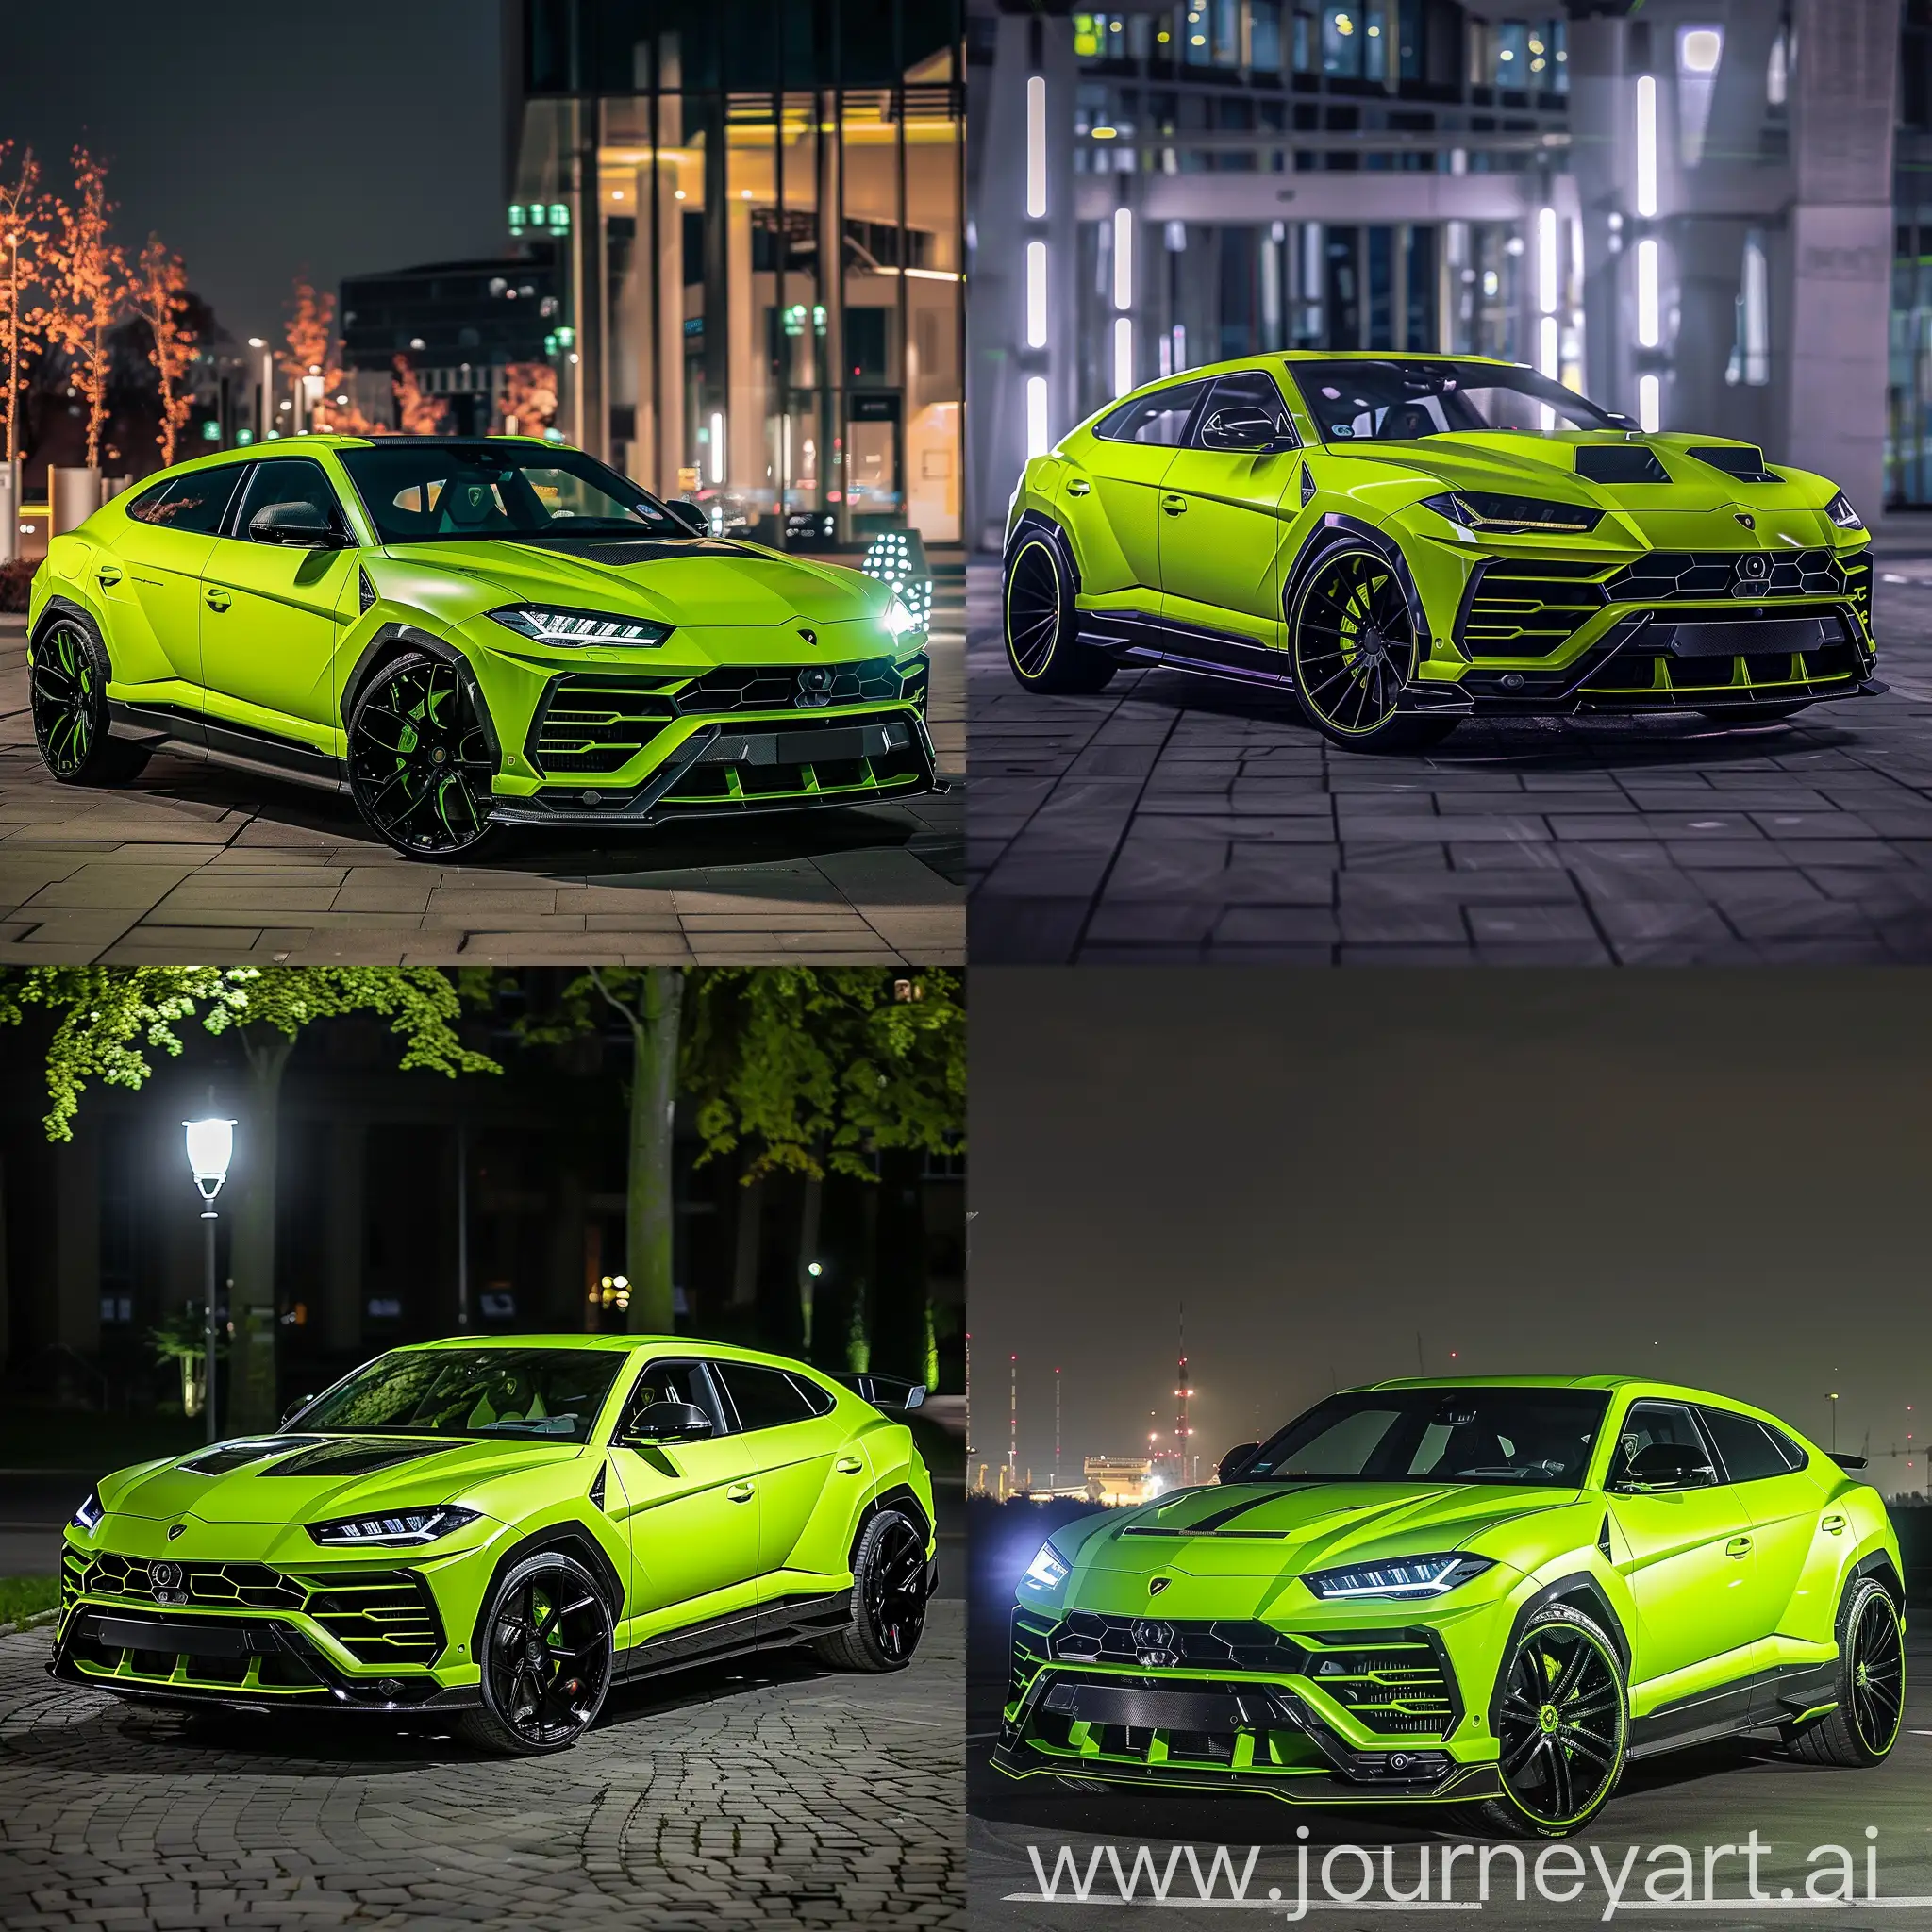 Lime-Green-Mansory-Tuned-Lamborghini-Urus-Night-Drive-in-Germany